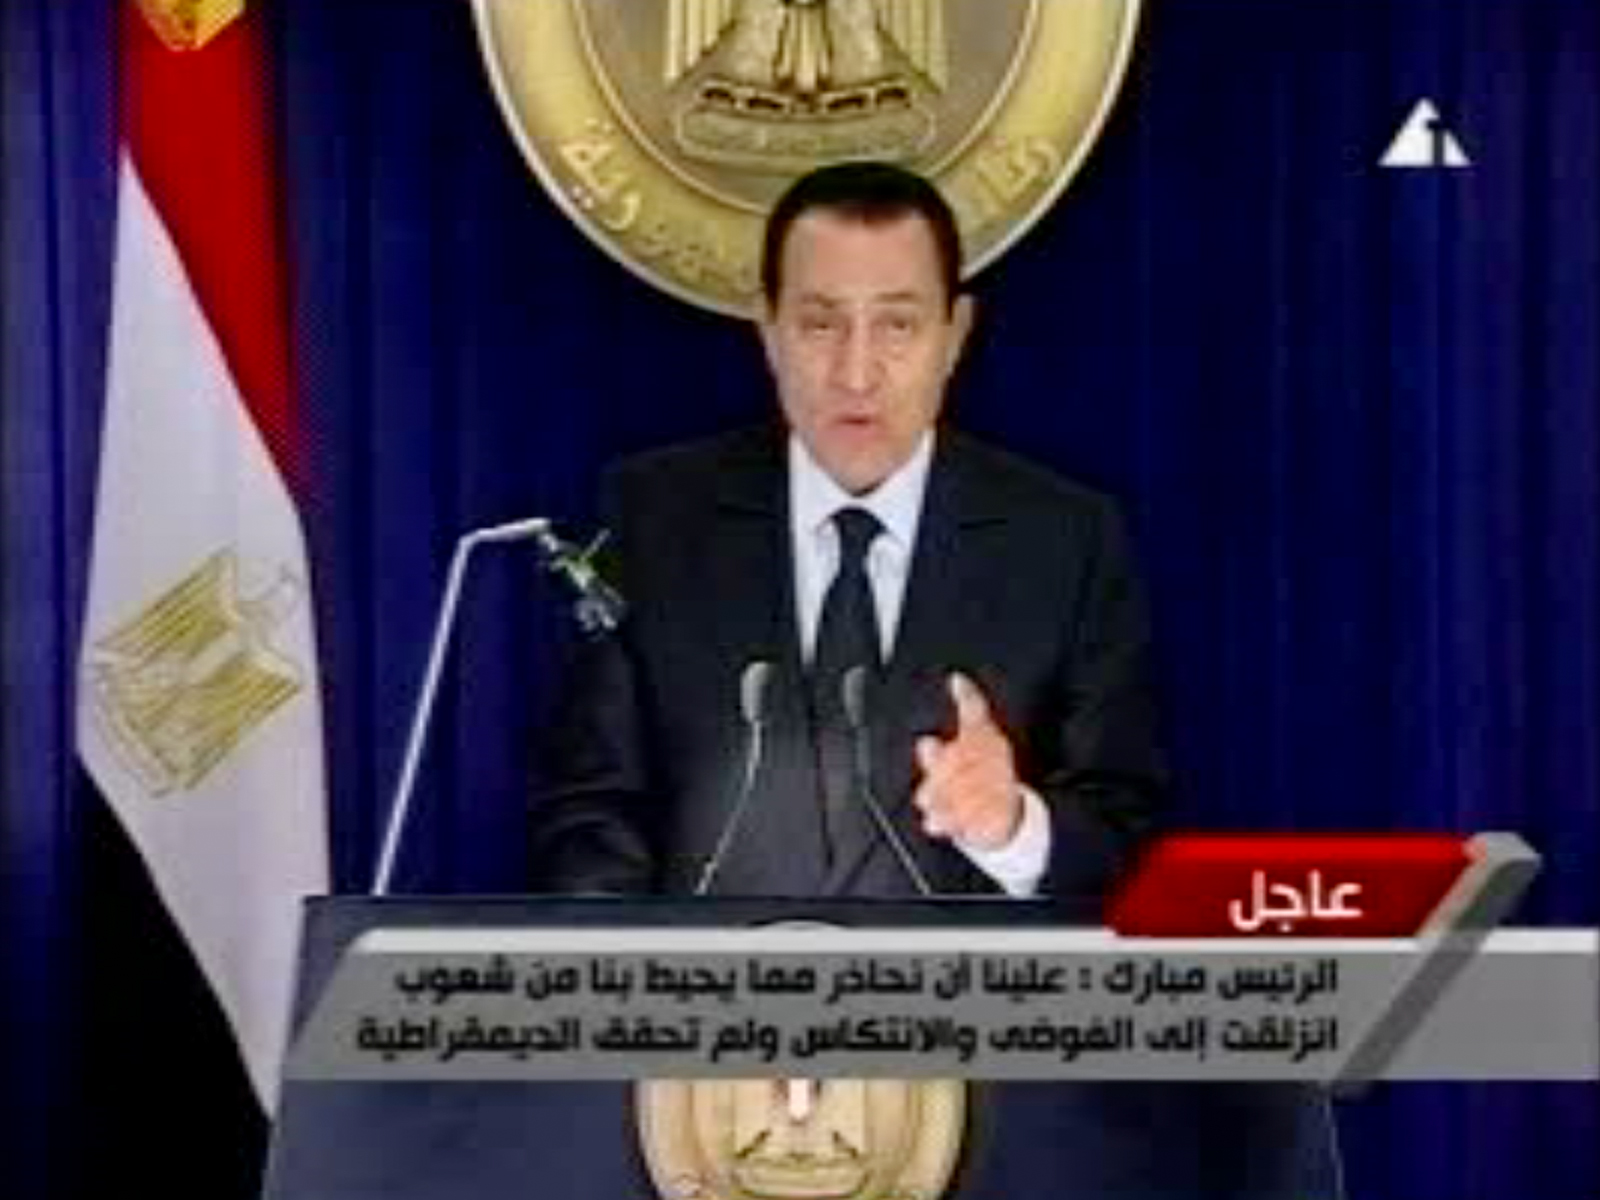 Hosni Mubarak, Revolution, Al Jazeera, Kravaller, Sociala Medier, Demonstration, Bloggare, Egypten, Internet